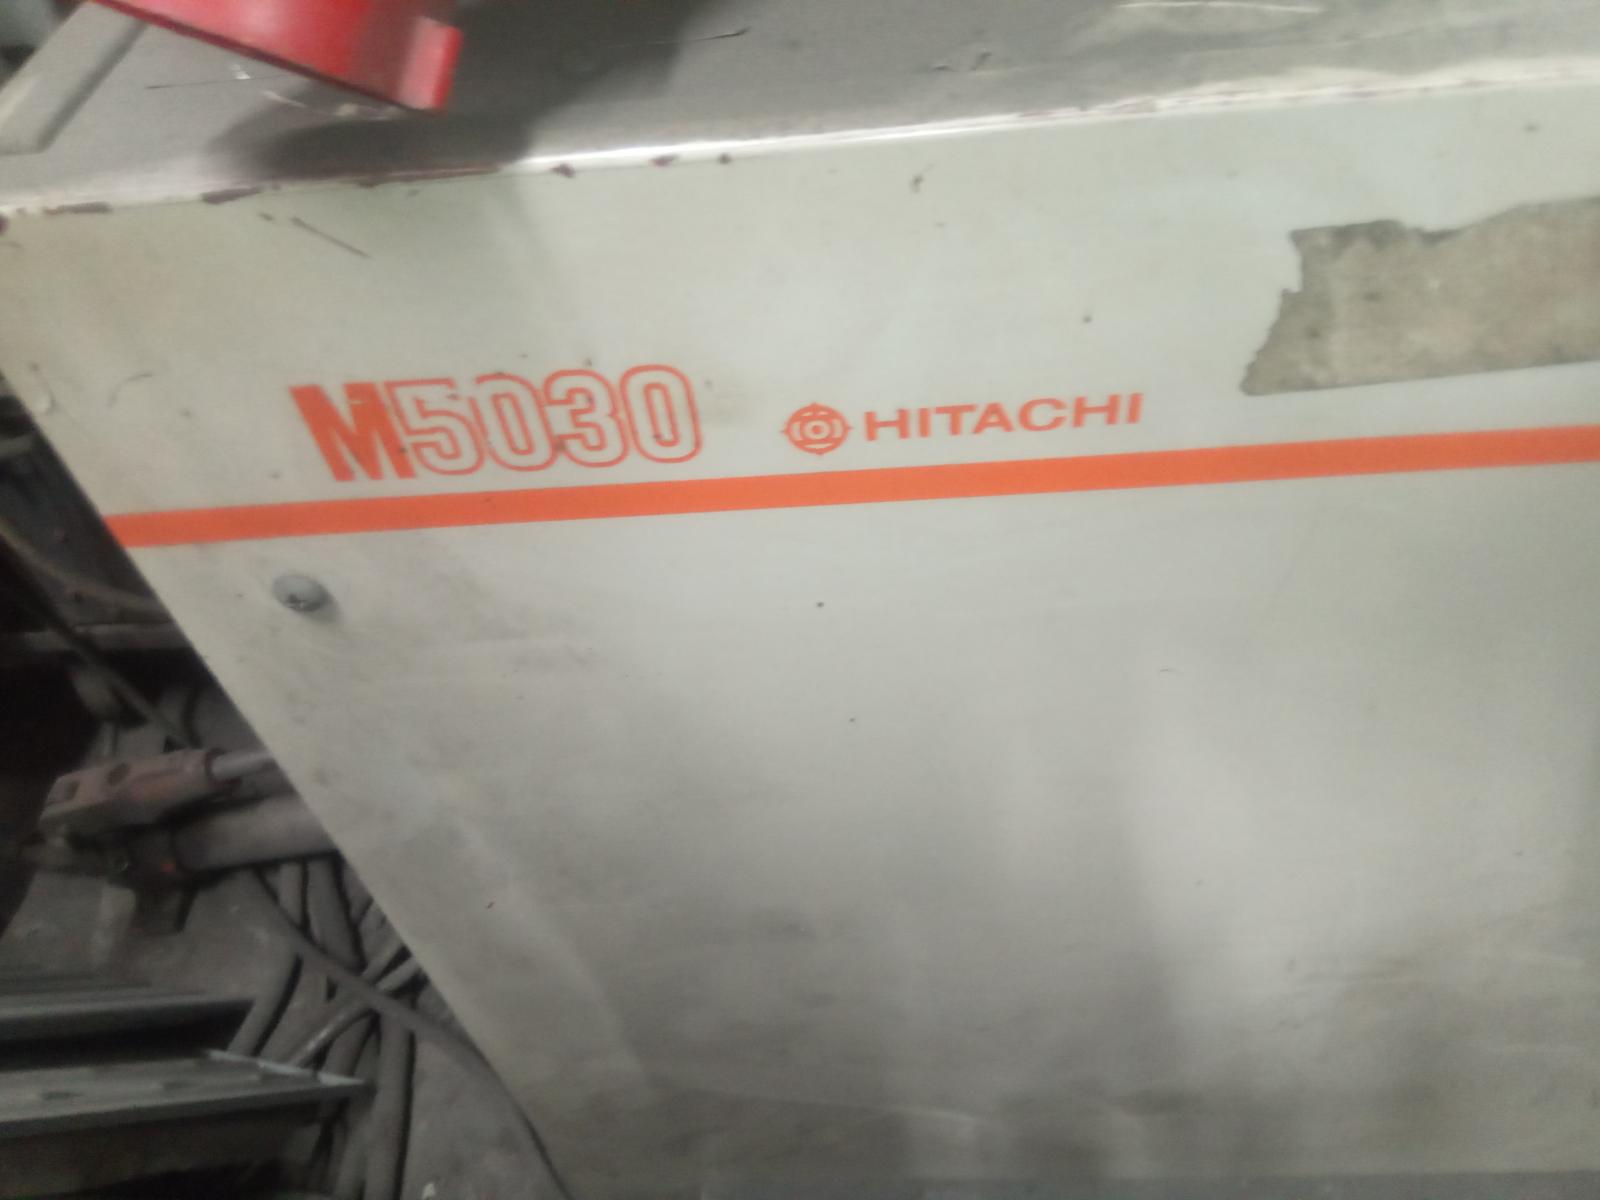 Robot Hitachi M5030